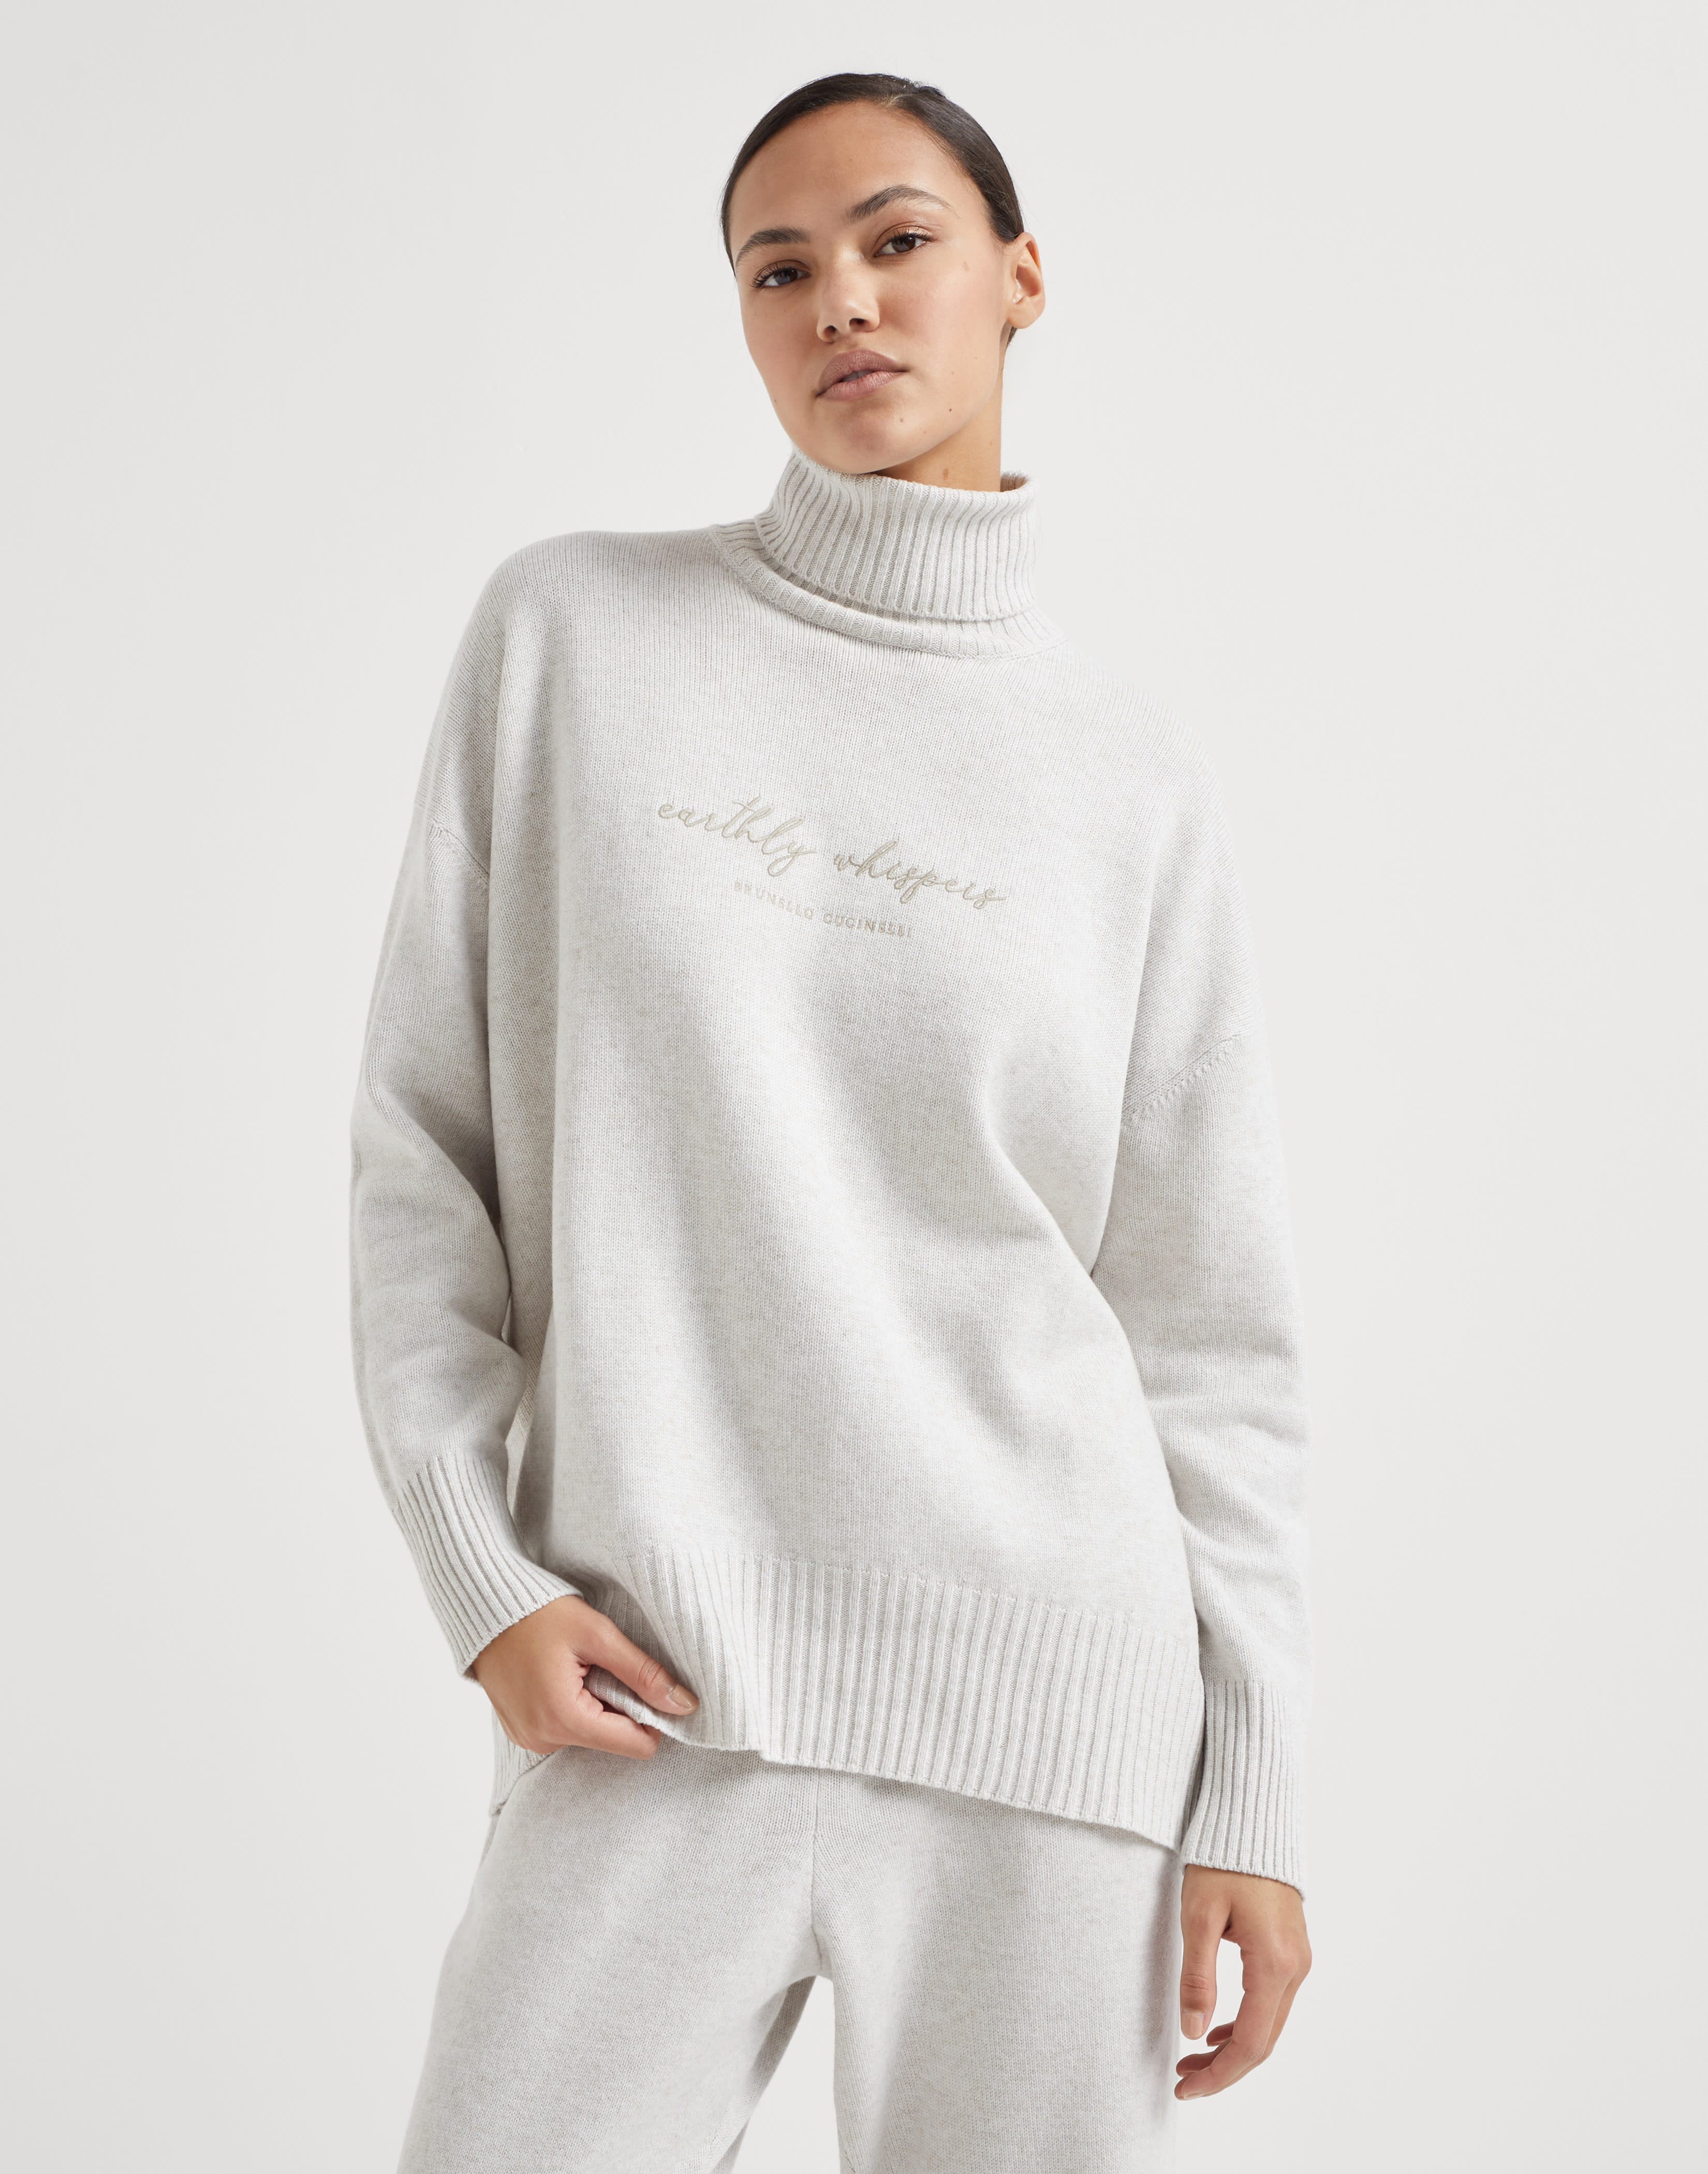 Knit Sweatshirt - Front view